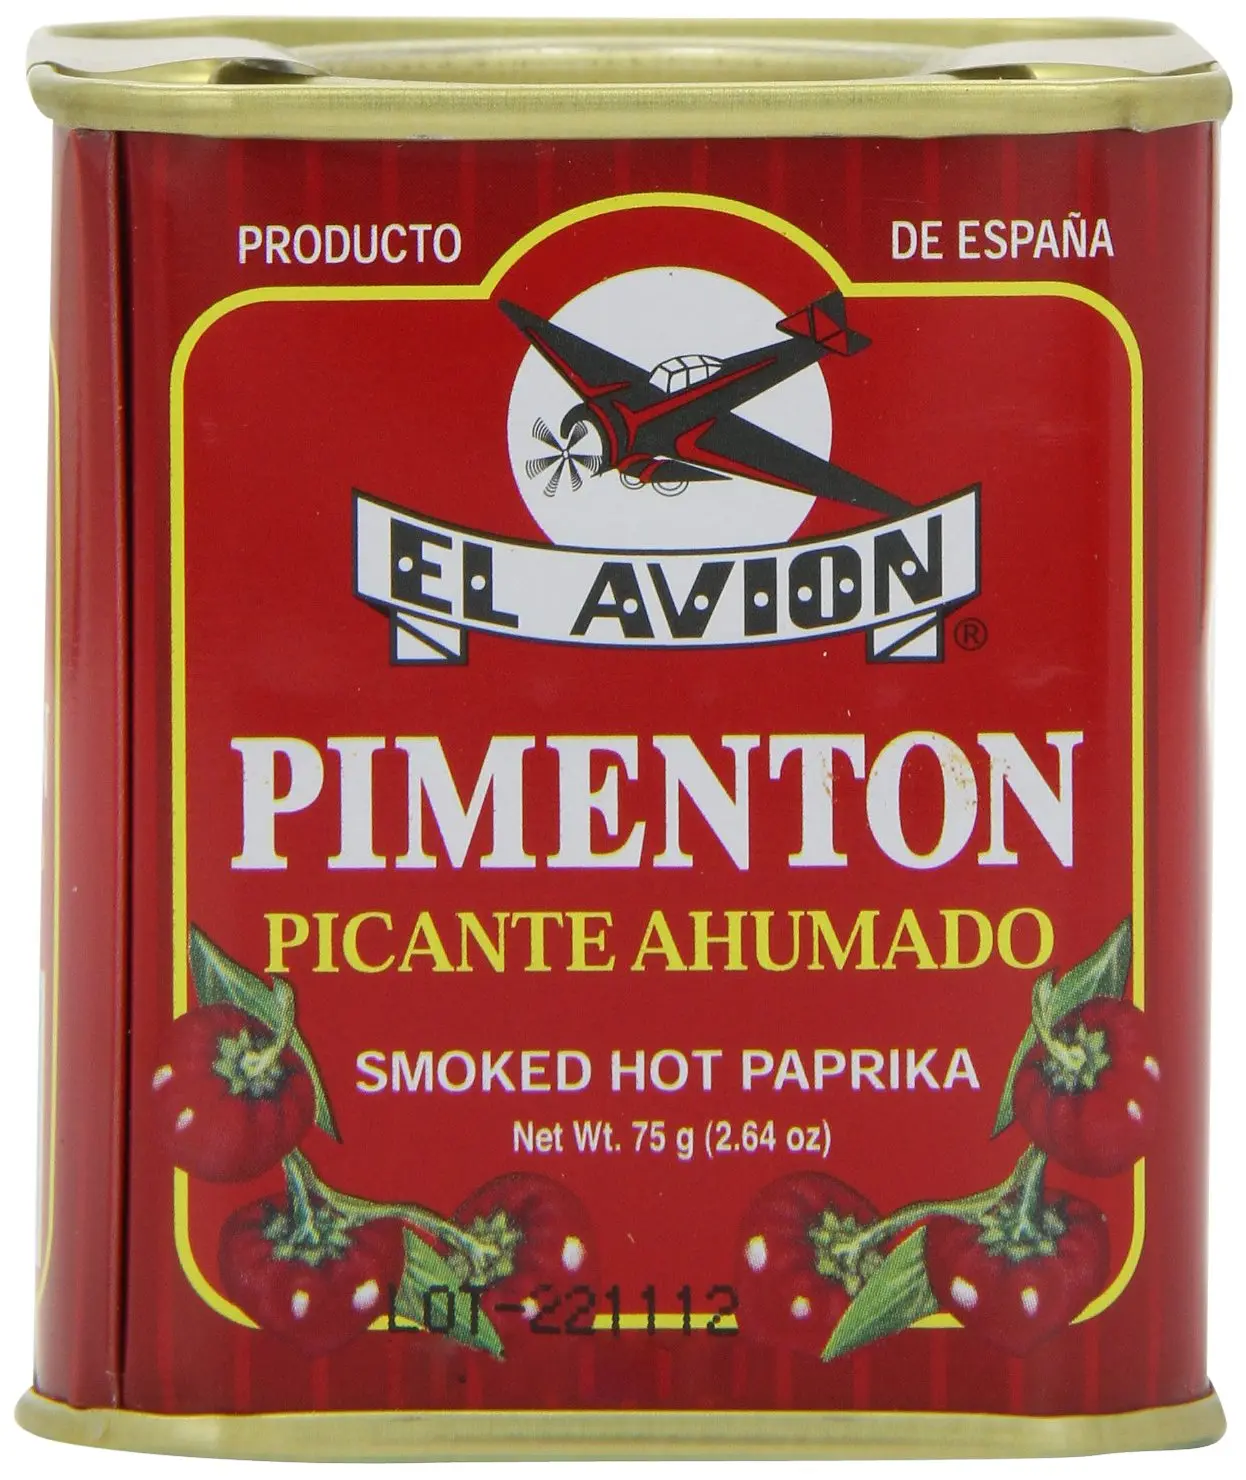 pimenton ahumado smoked paprika - What is pimentón ahumado